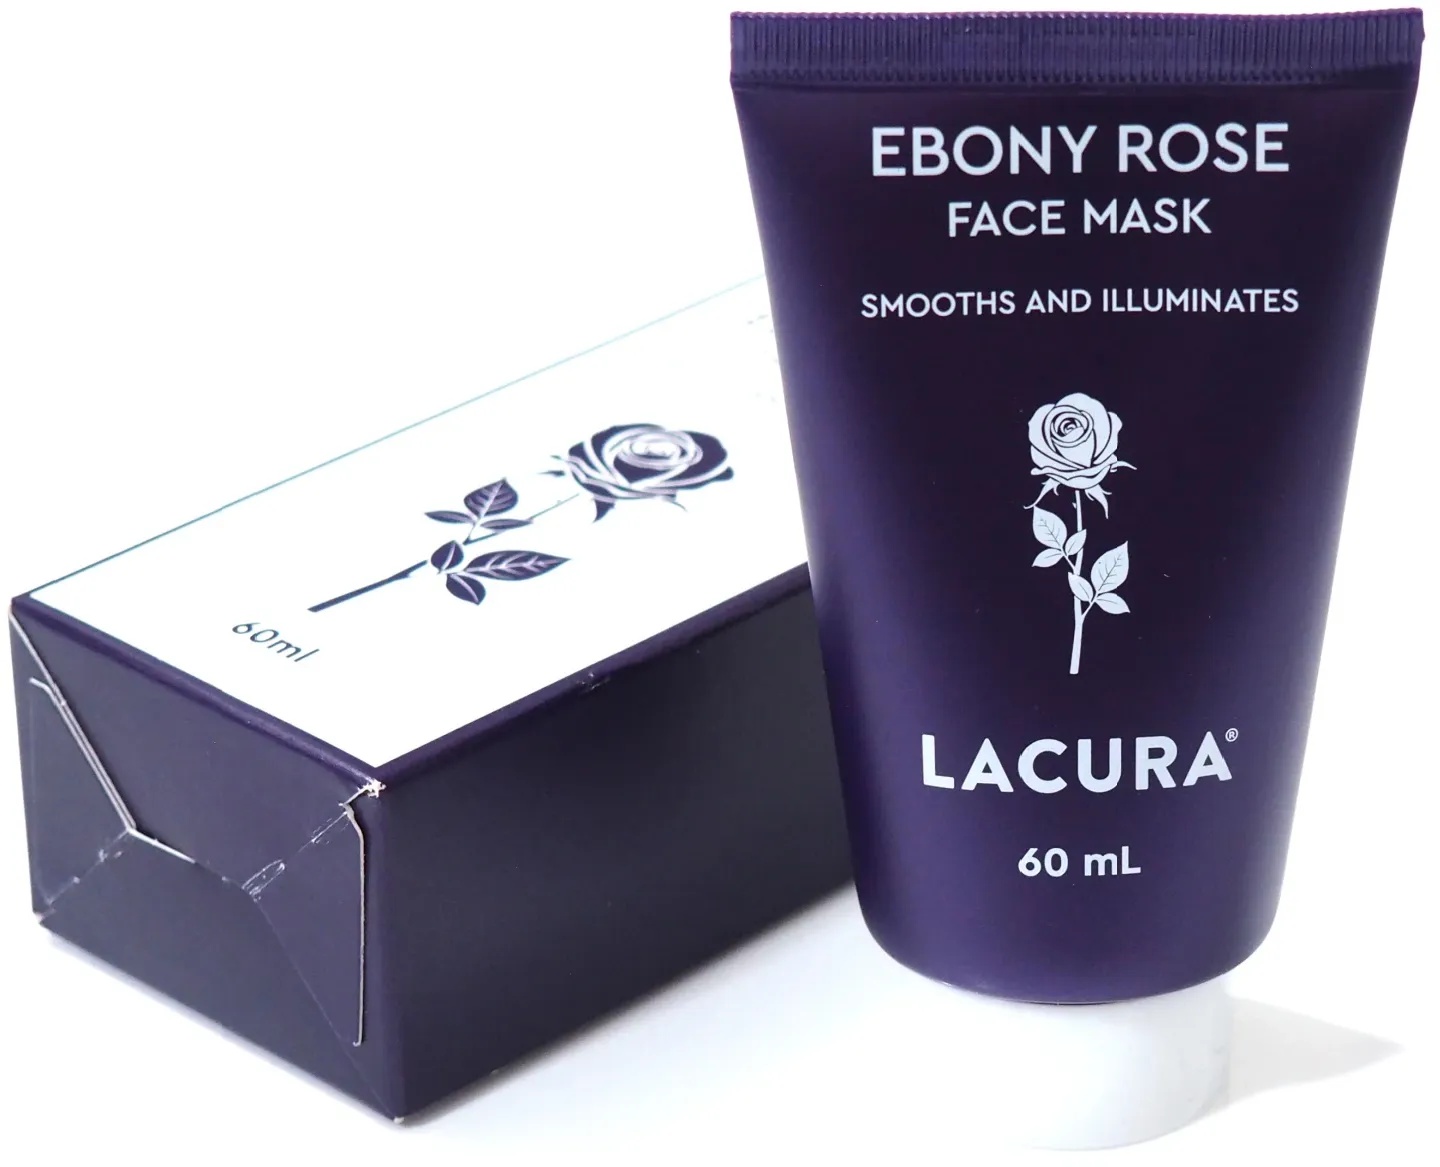 LACURA Ebony Rose Face Mask